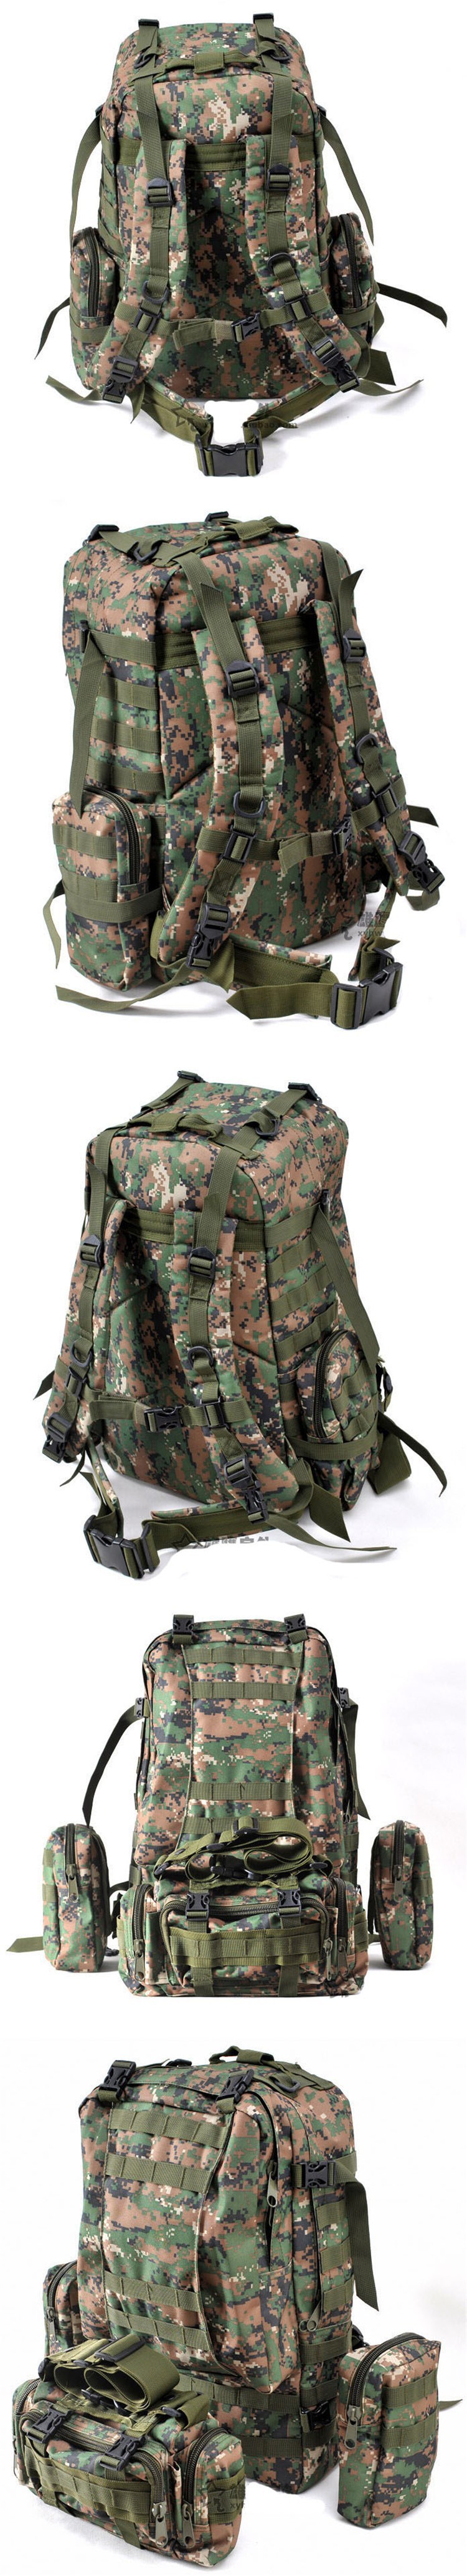 military bag molle11